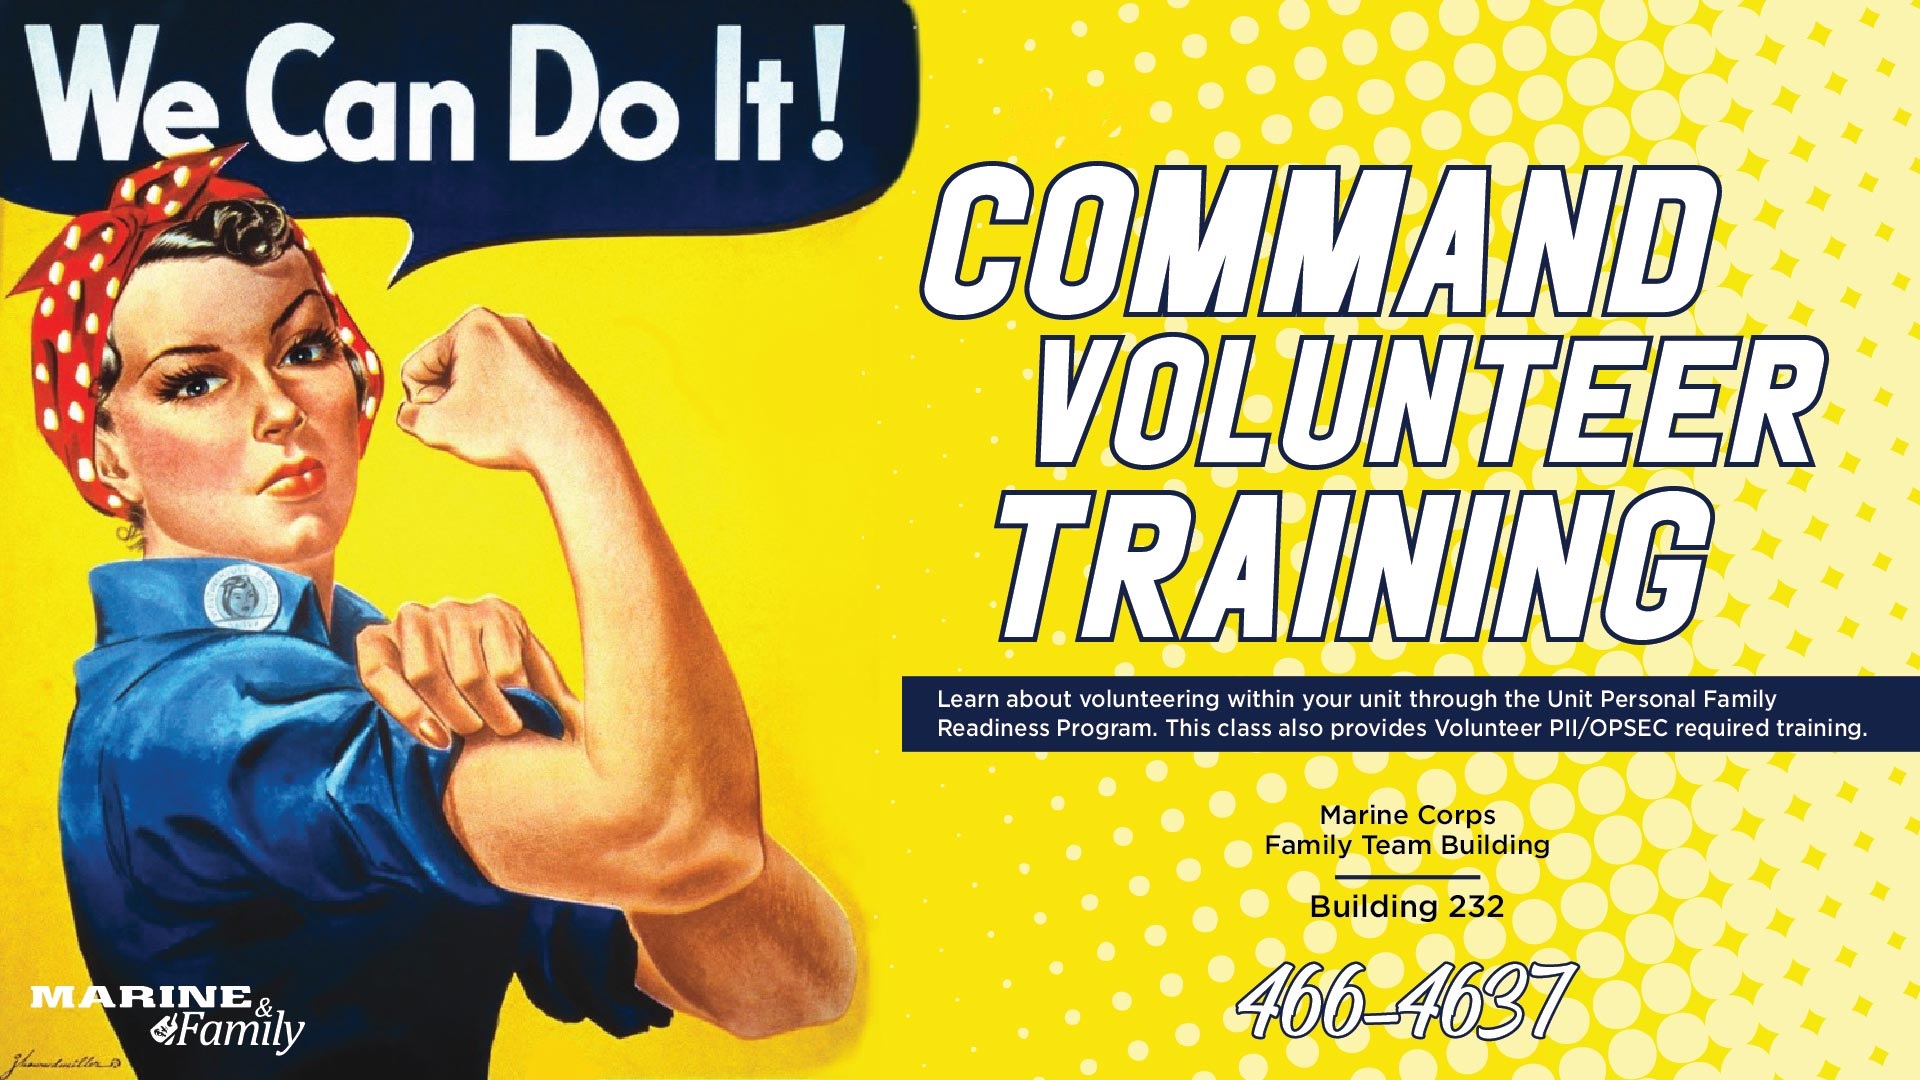 Command Volunteer Training